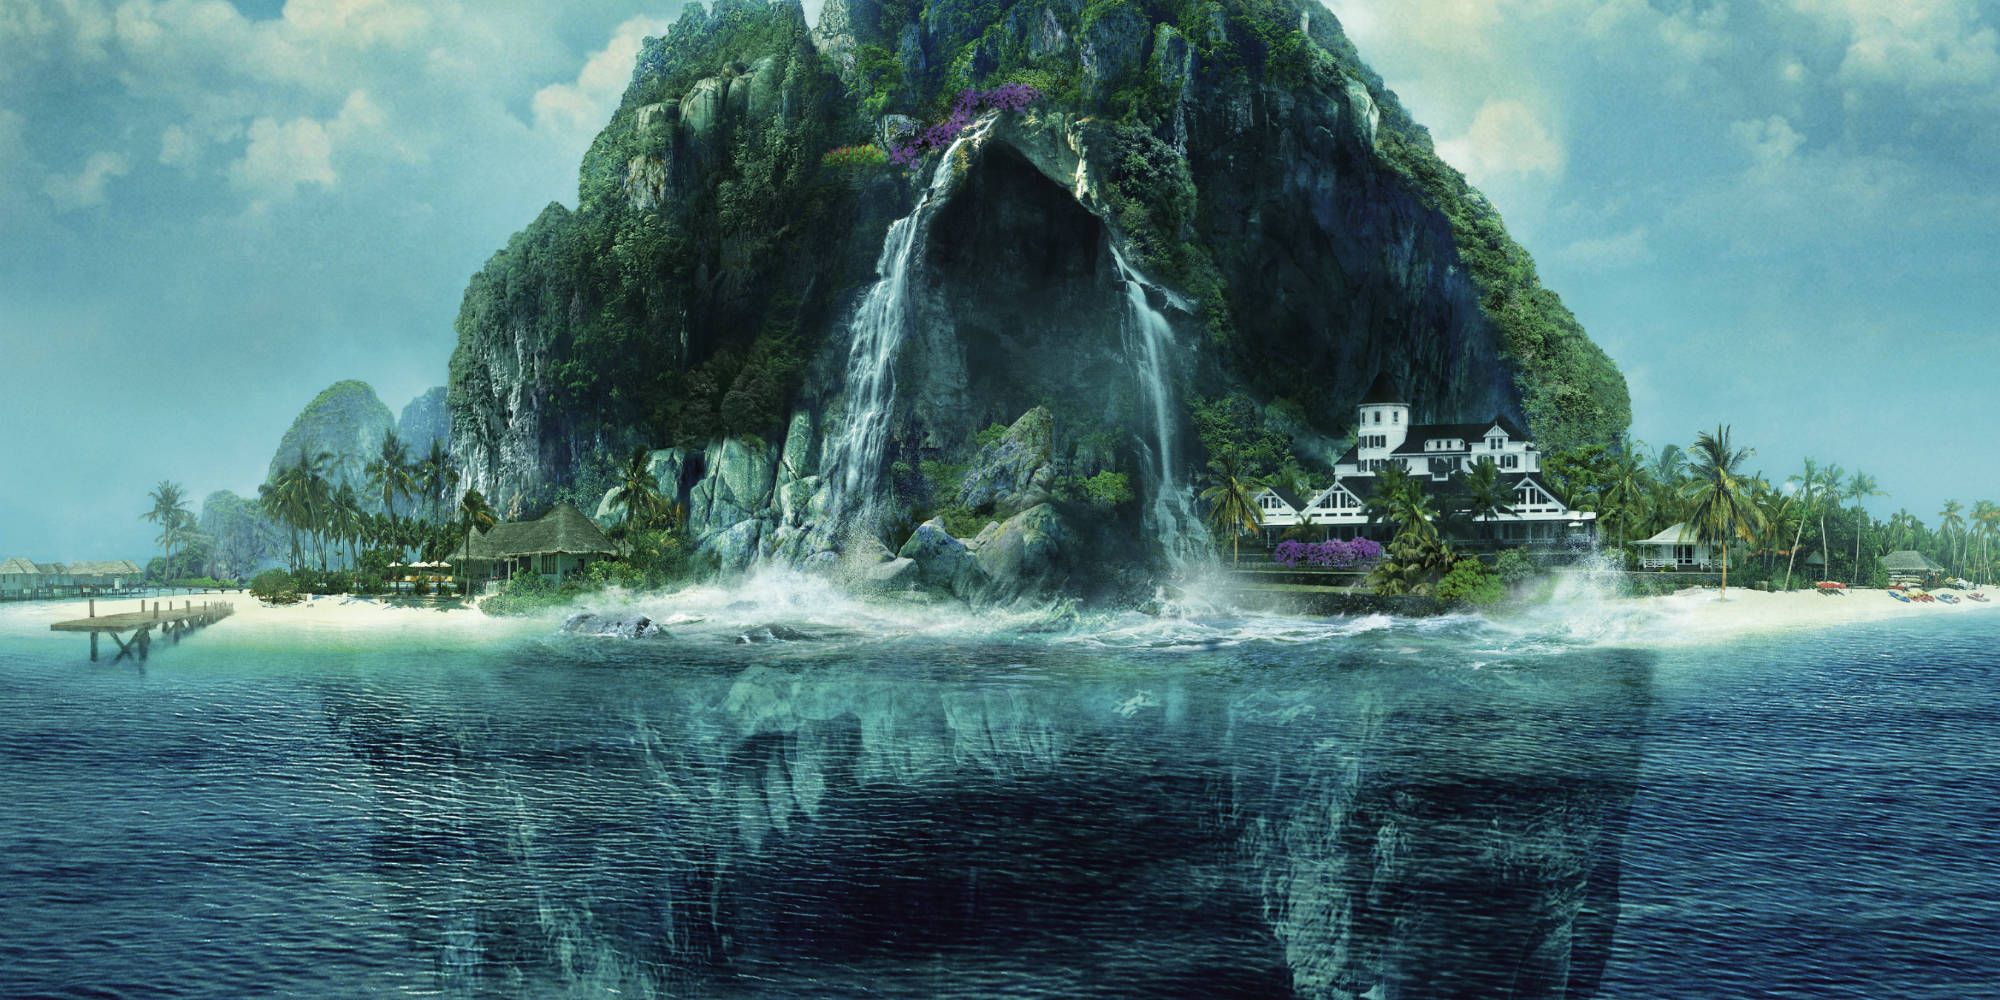 Fantasy Island 2 Updates: Release Date & Story Info